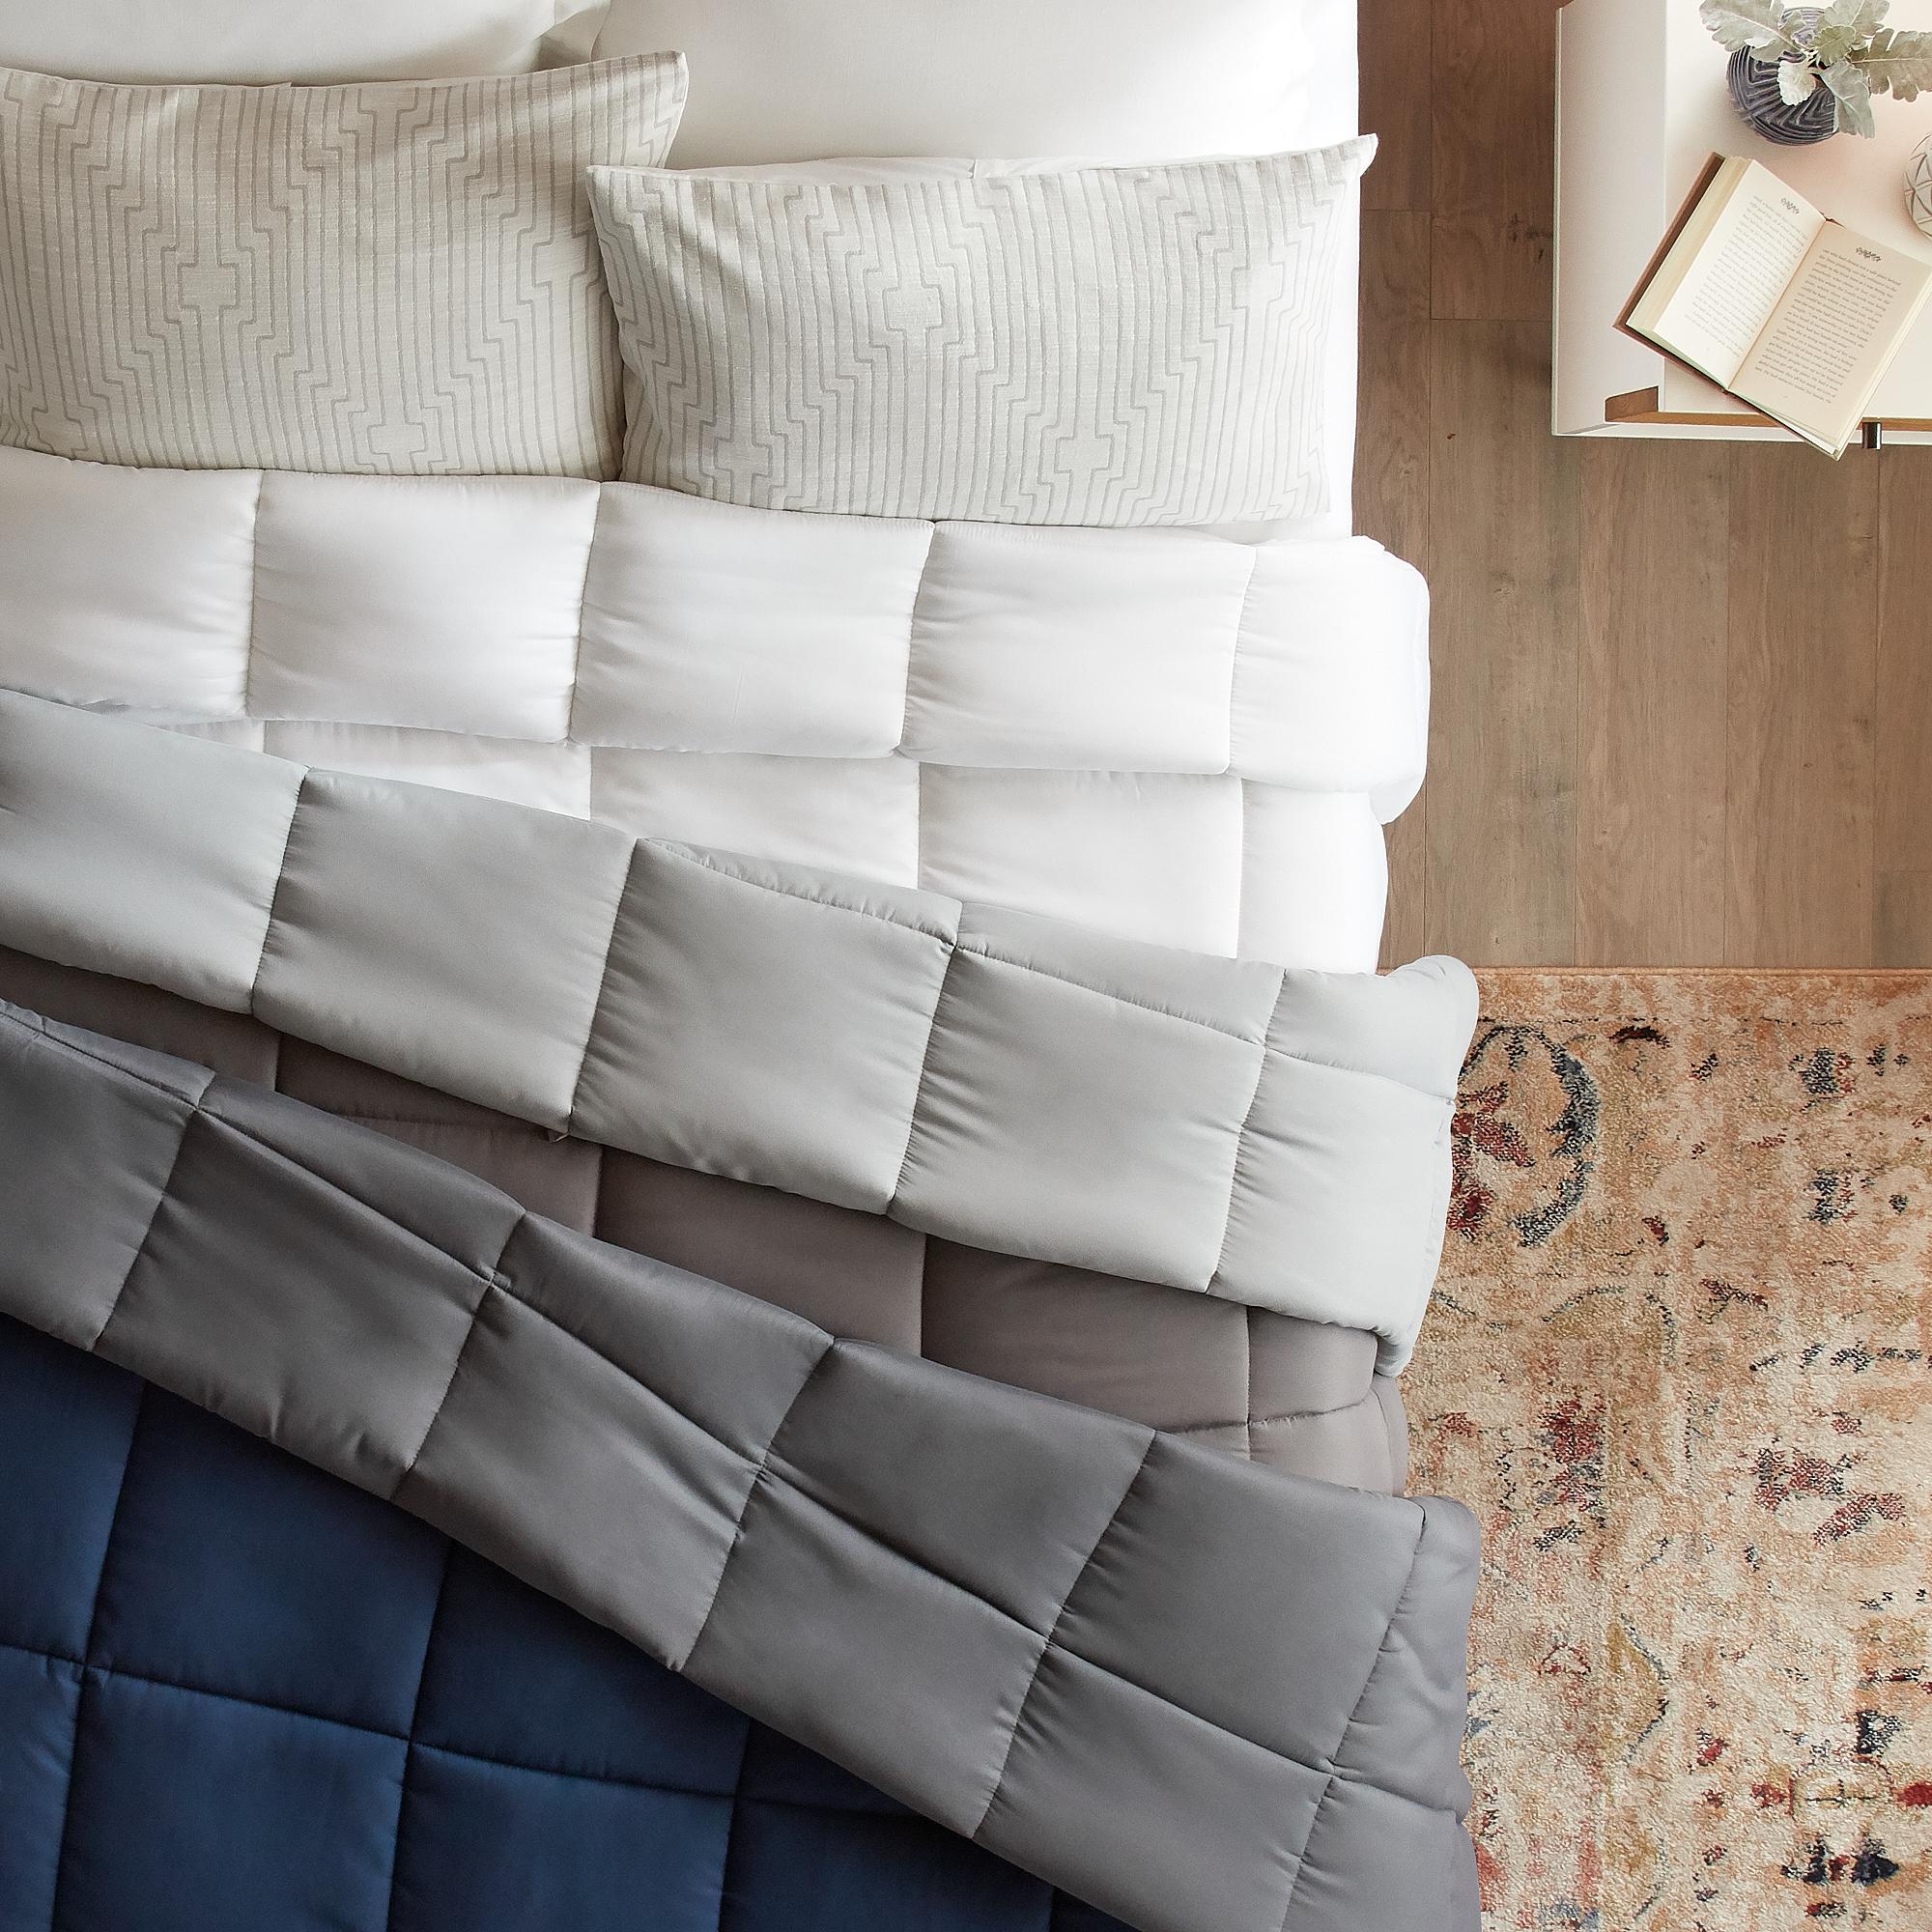 Rest Haven All-Season Down Alternative Comforter, Twin, White - image 1 of 10